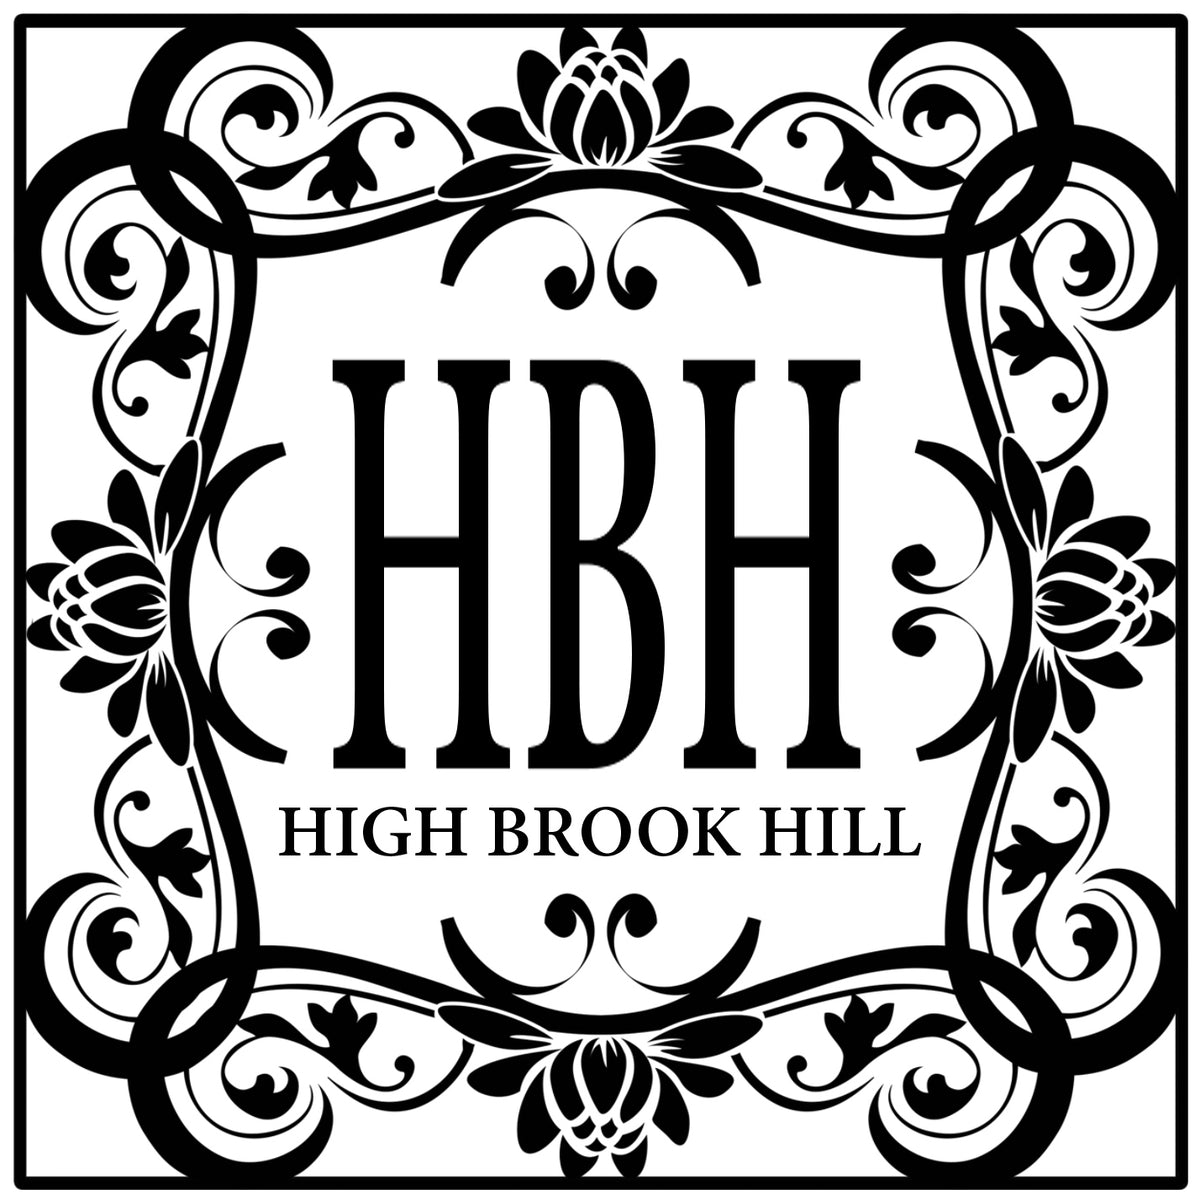 www.highbrookhill.com